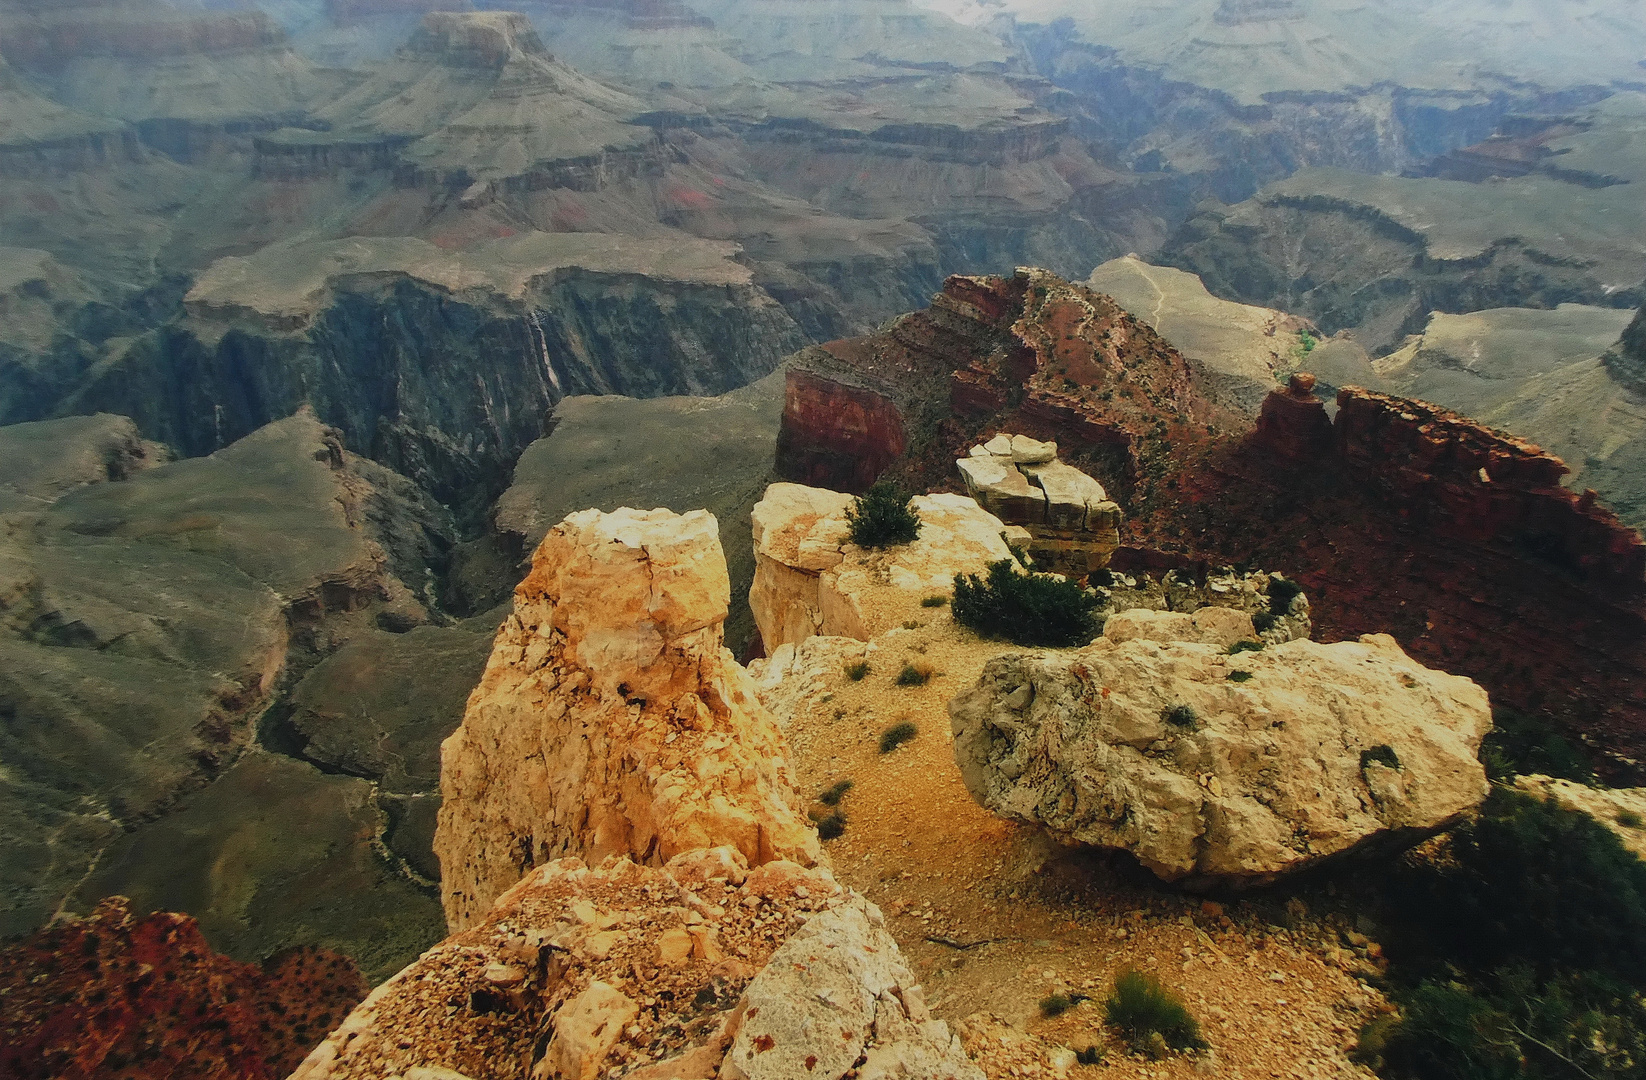 Grand Canyon spezieller Blickwinkel